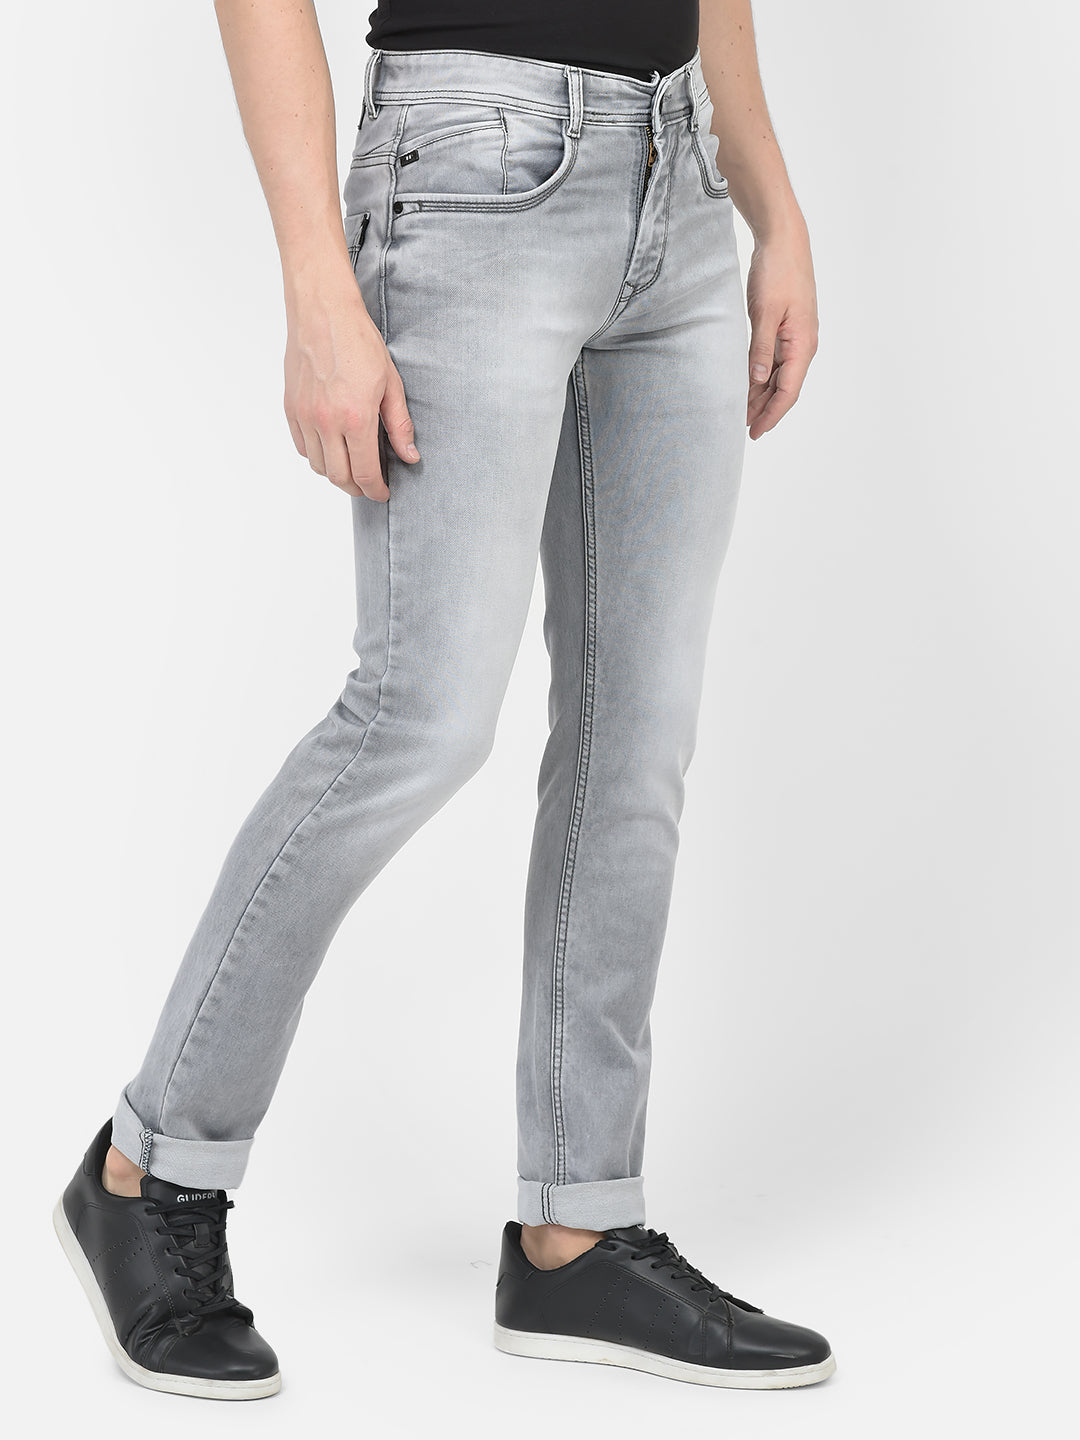  Grey Light-Wash Jeans